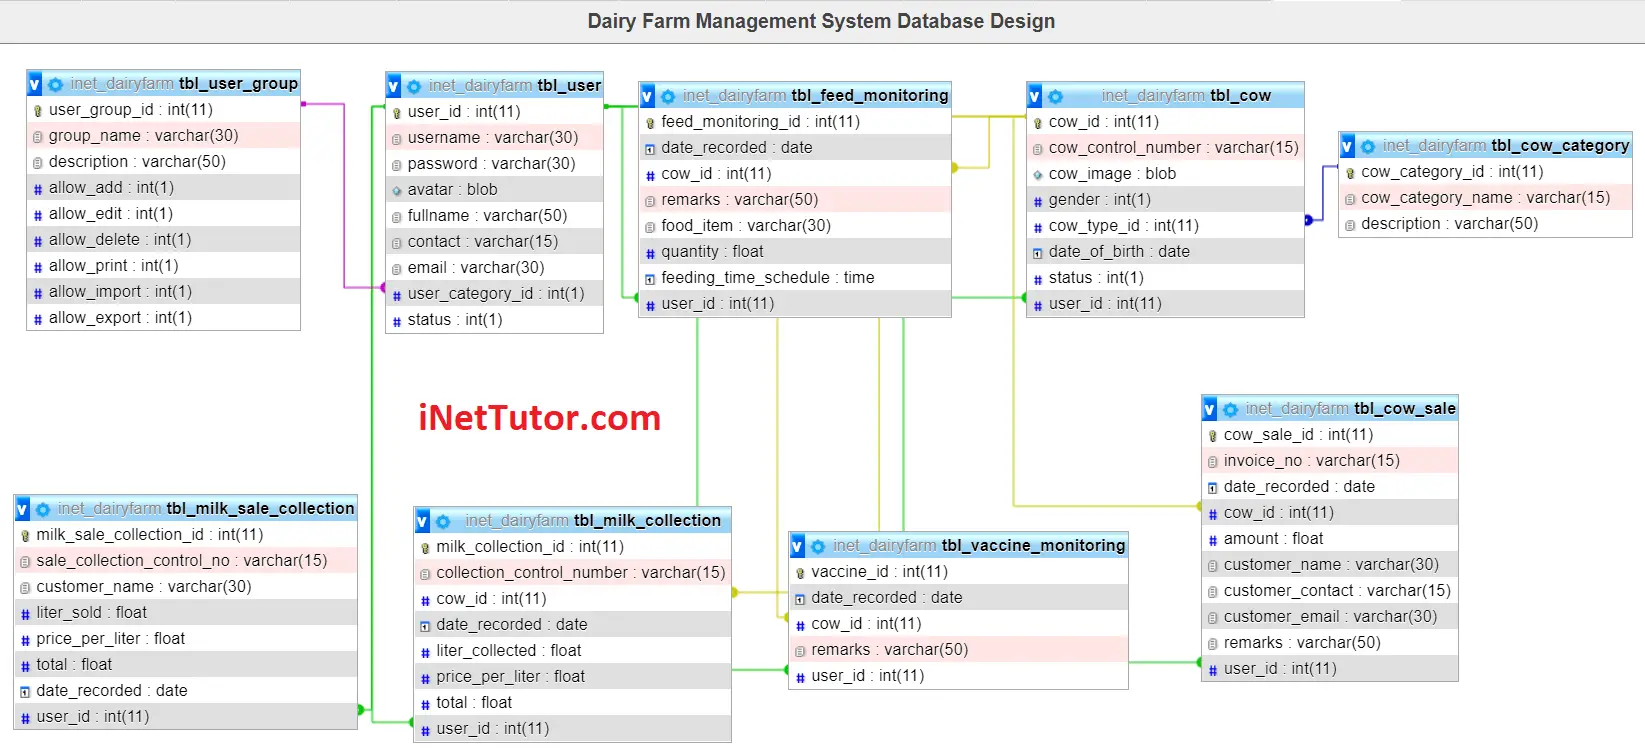 Dairy Farm Management System Database Design